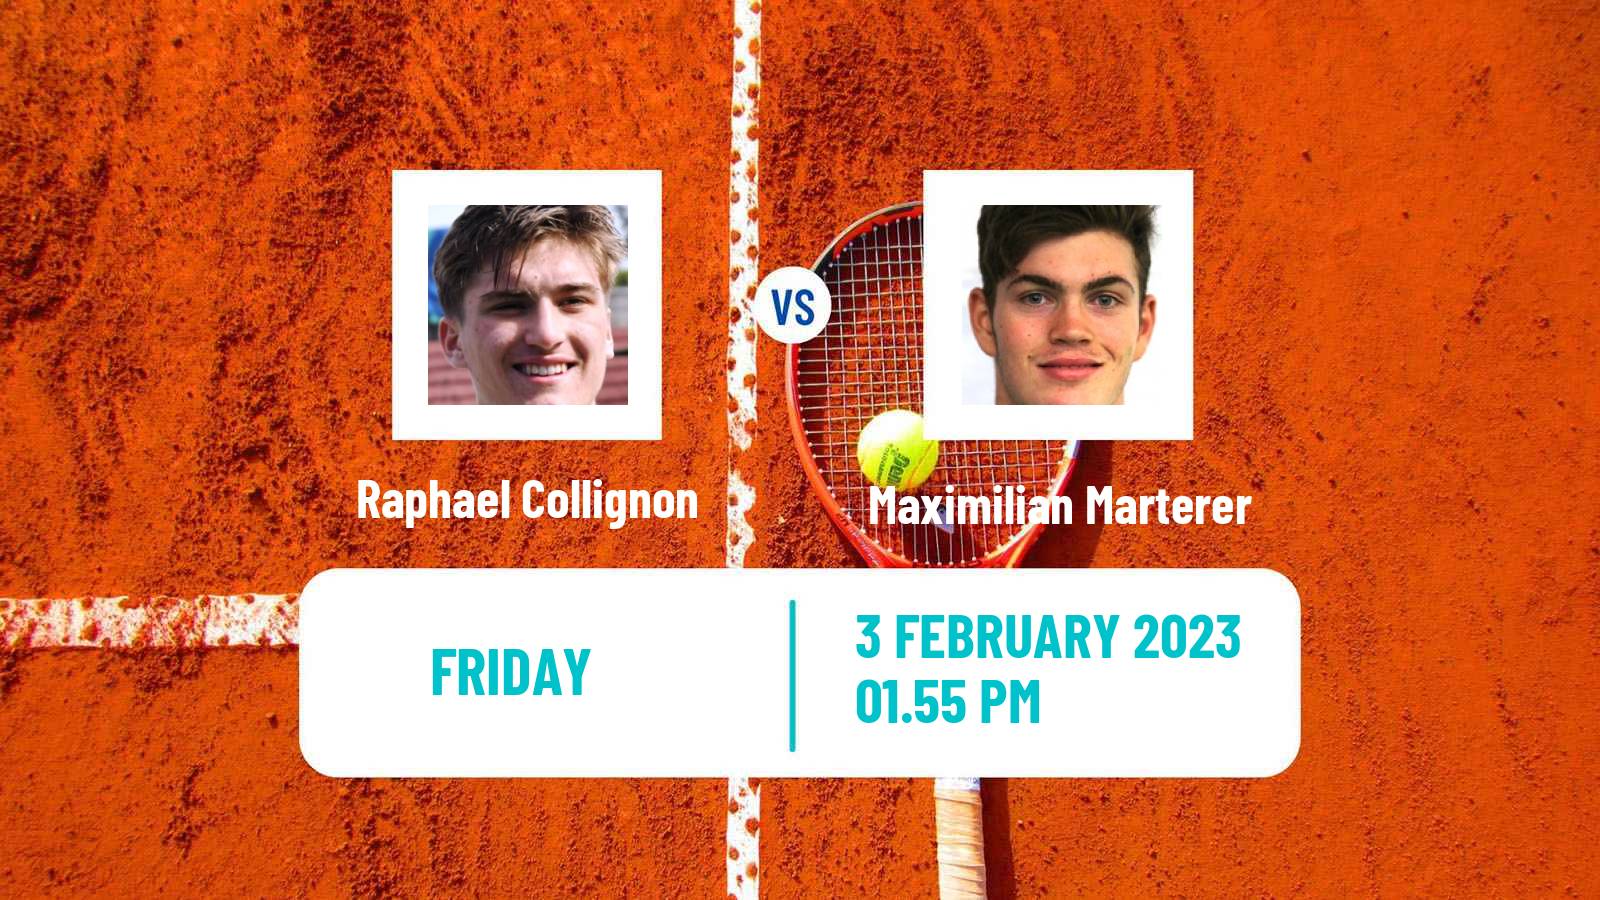 Tennis ATP Challenger Raphael Collignon - Maximilian Marterer